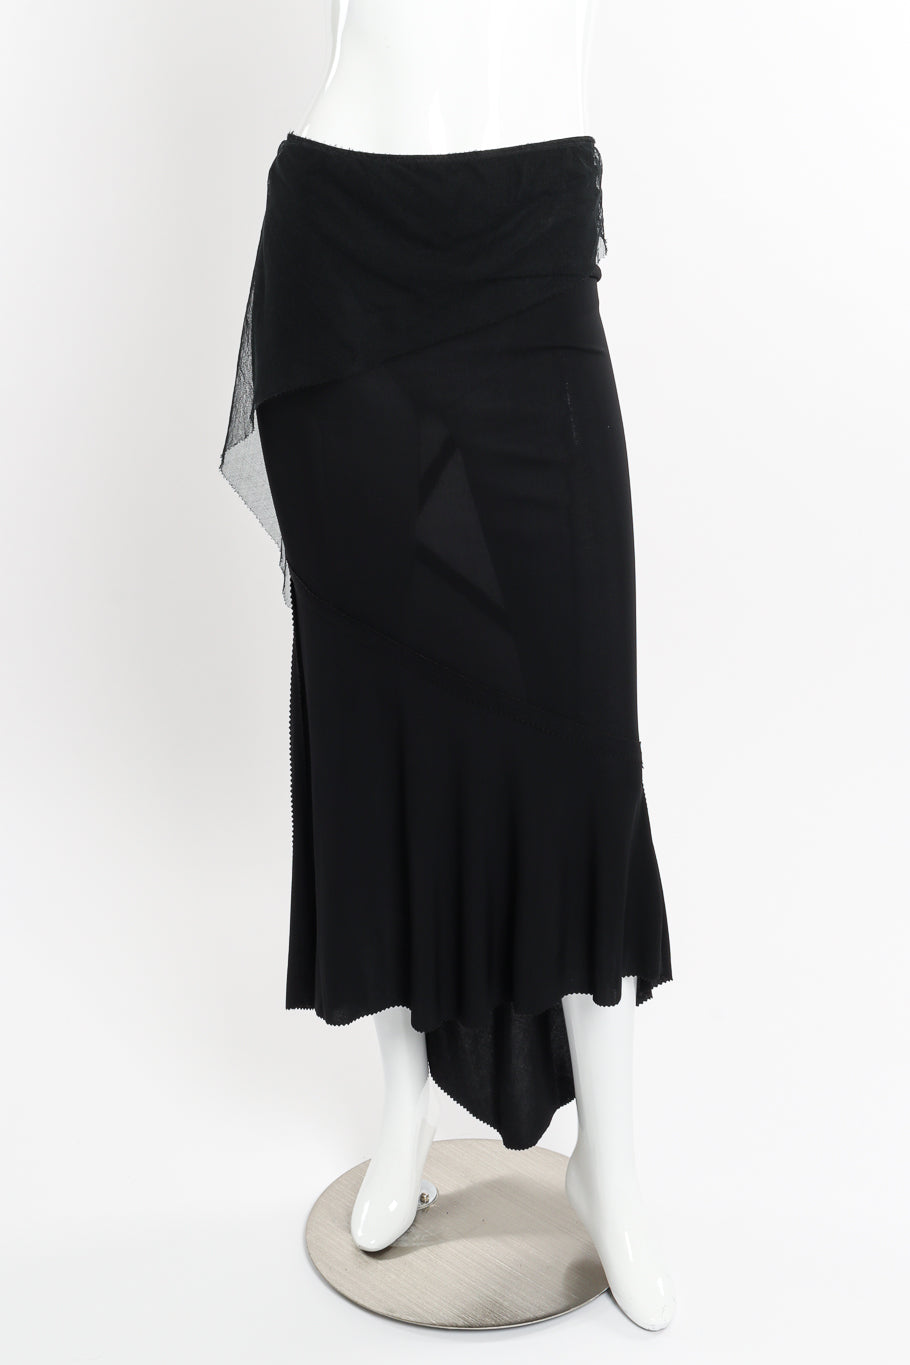 Jean Paul Gaultier Femme Mesh Overlay Ruffle Skirt front on mannequin @recessla